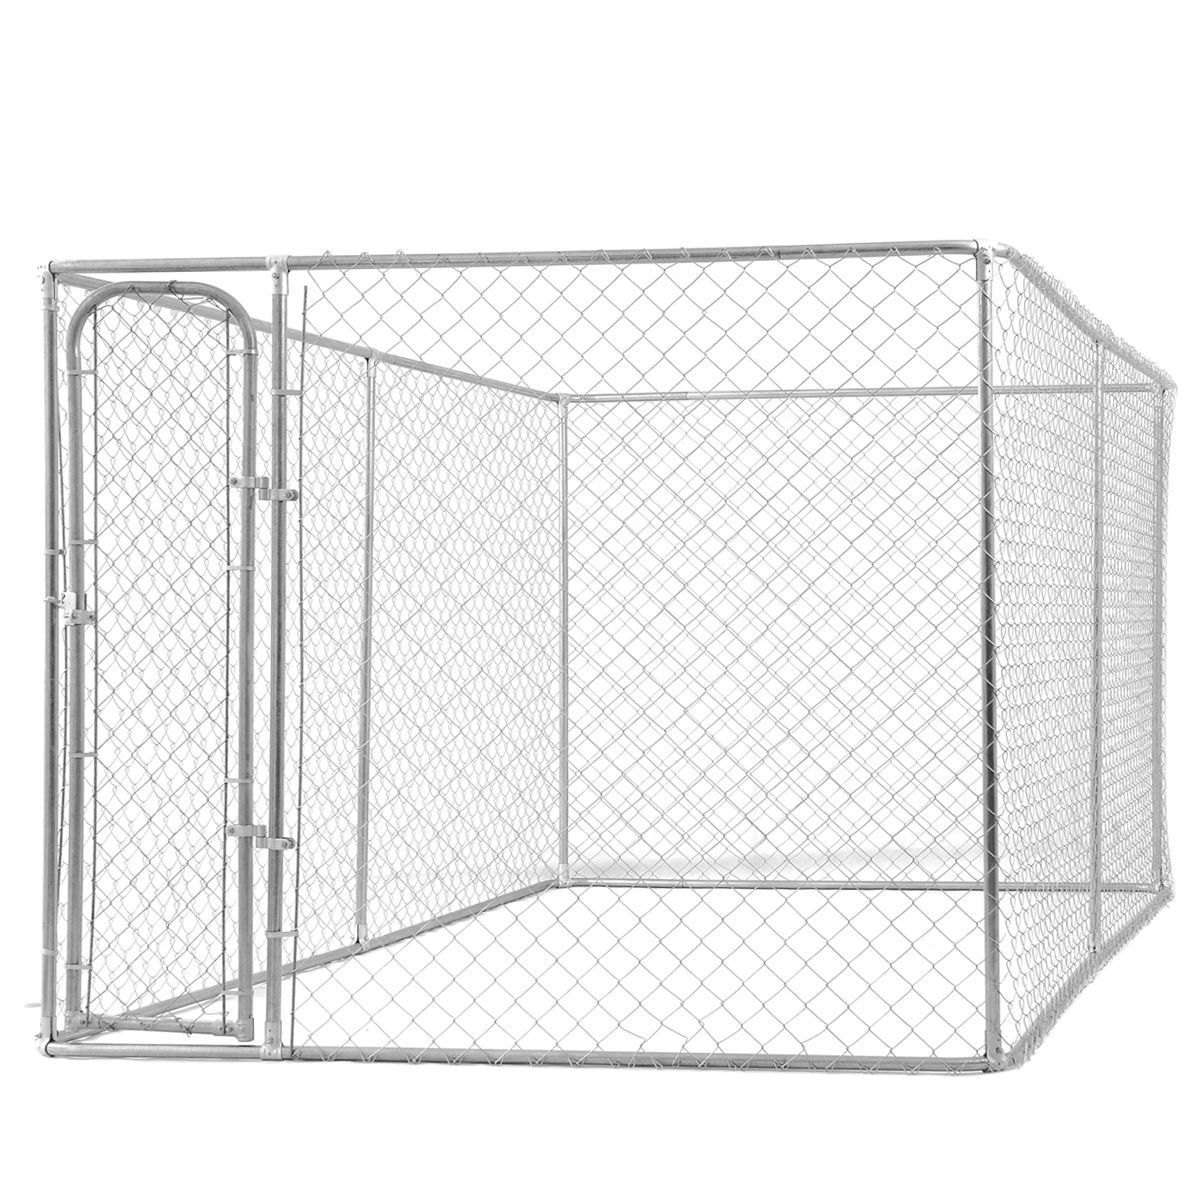 4 x 2.3m Steel Dog Enclosure